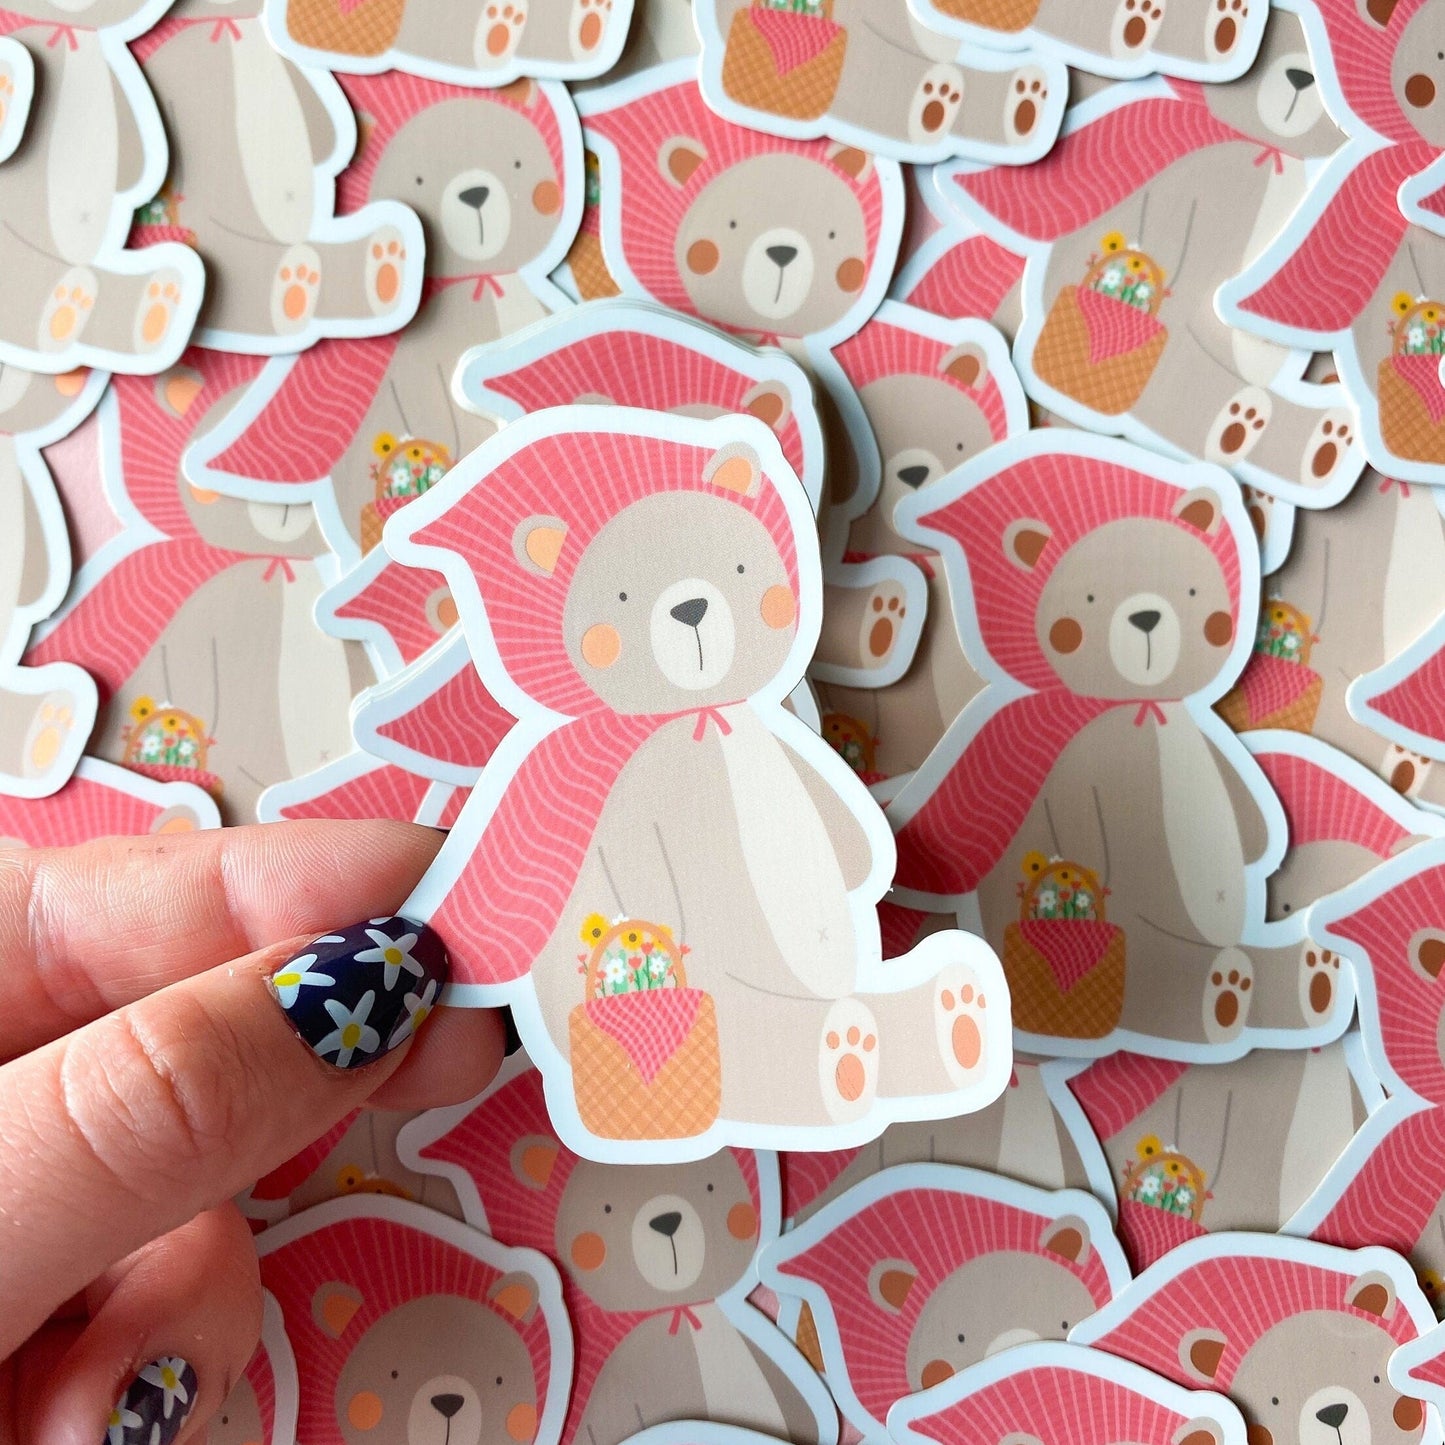 Teddy Bears Picnic Mirrored Sticker